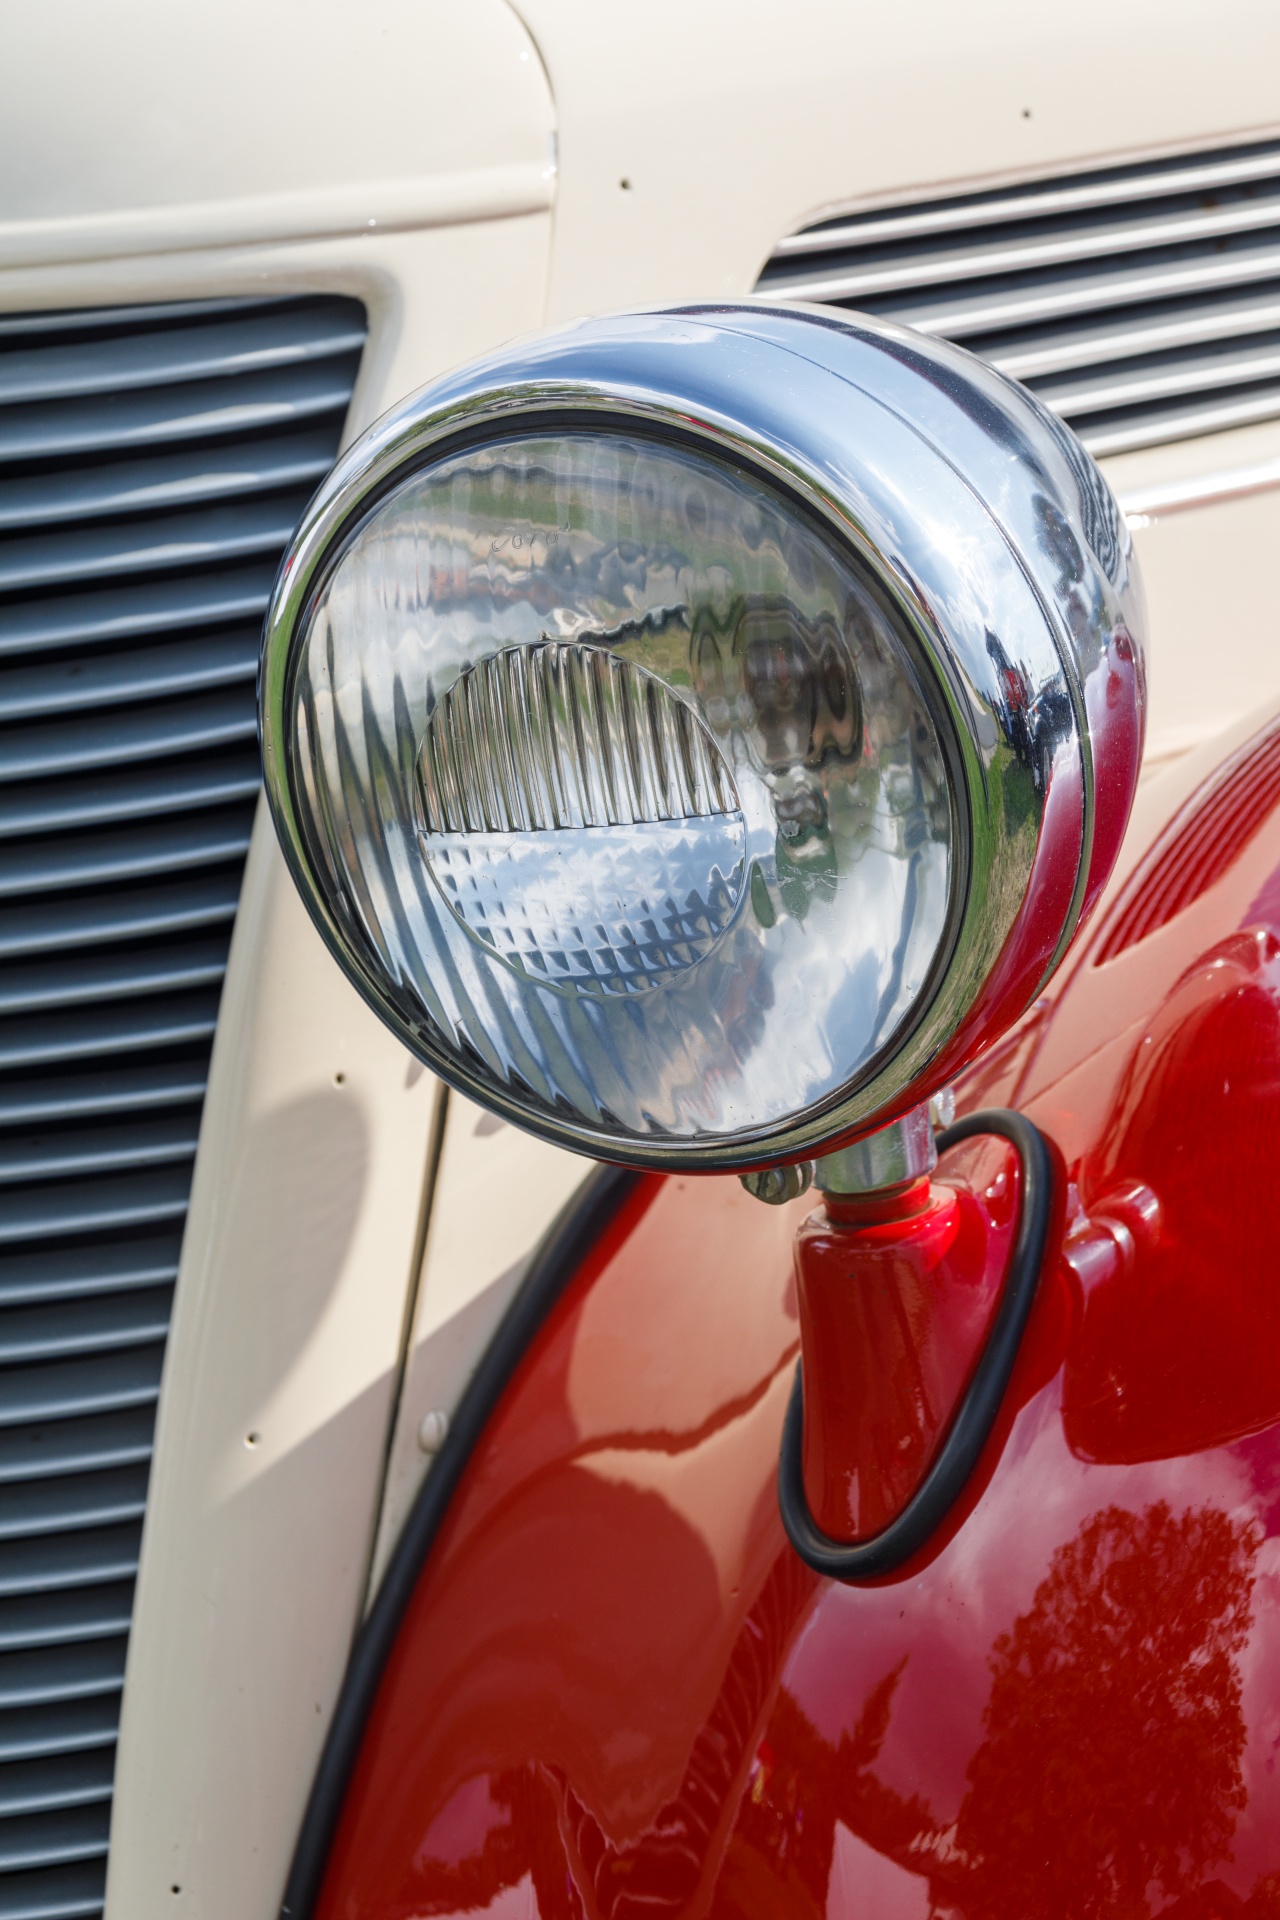 Vintage Car Headlight